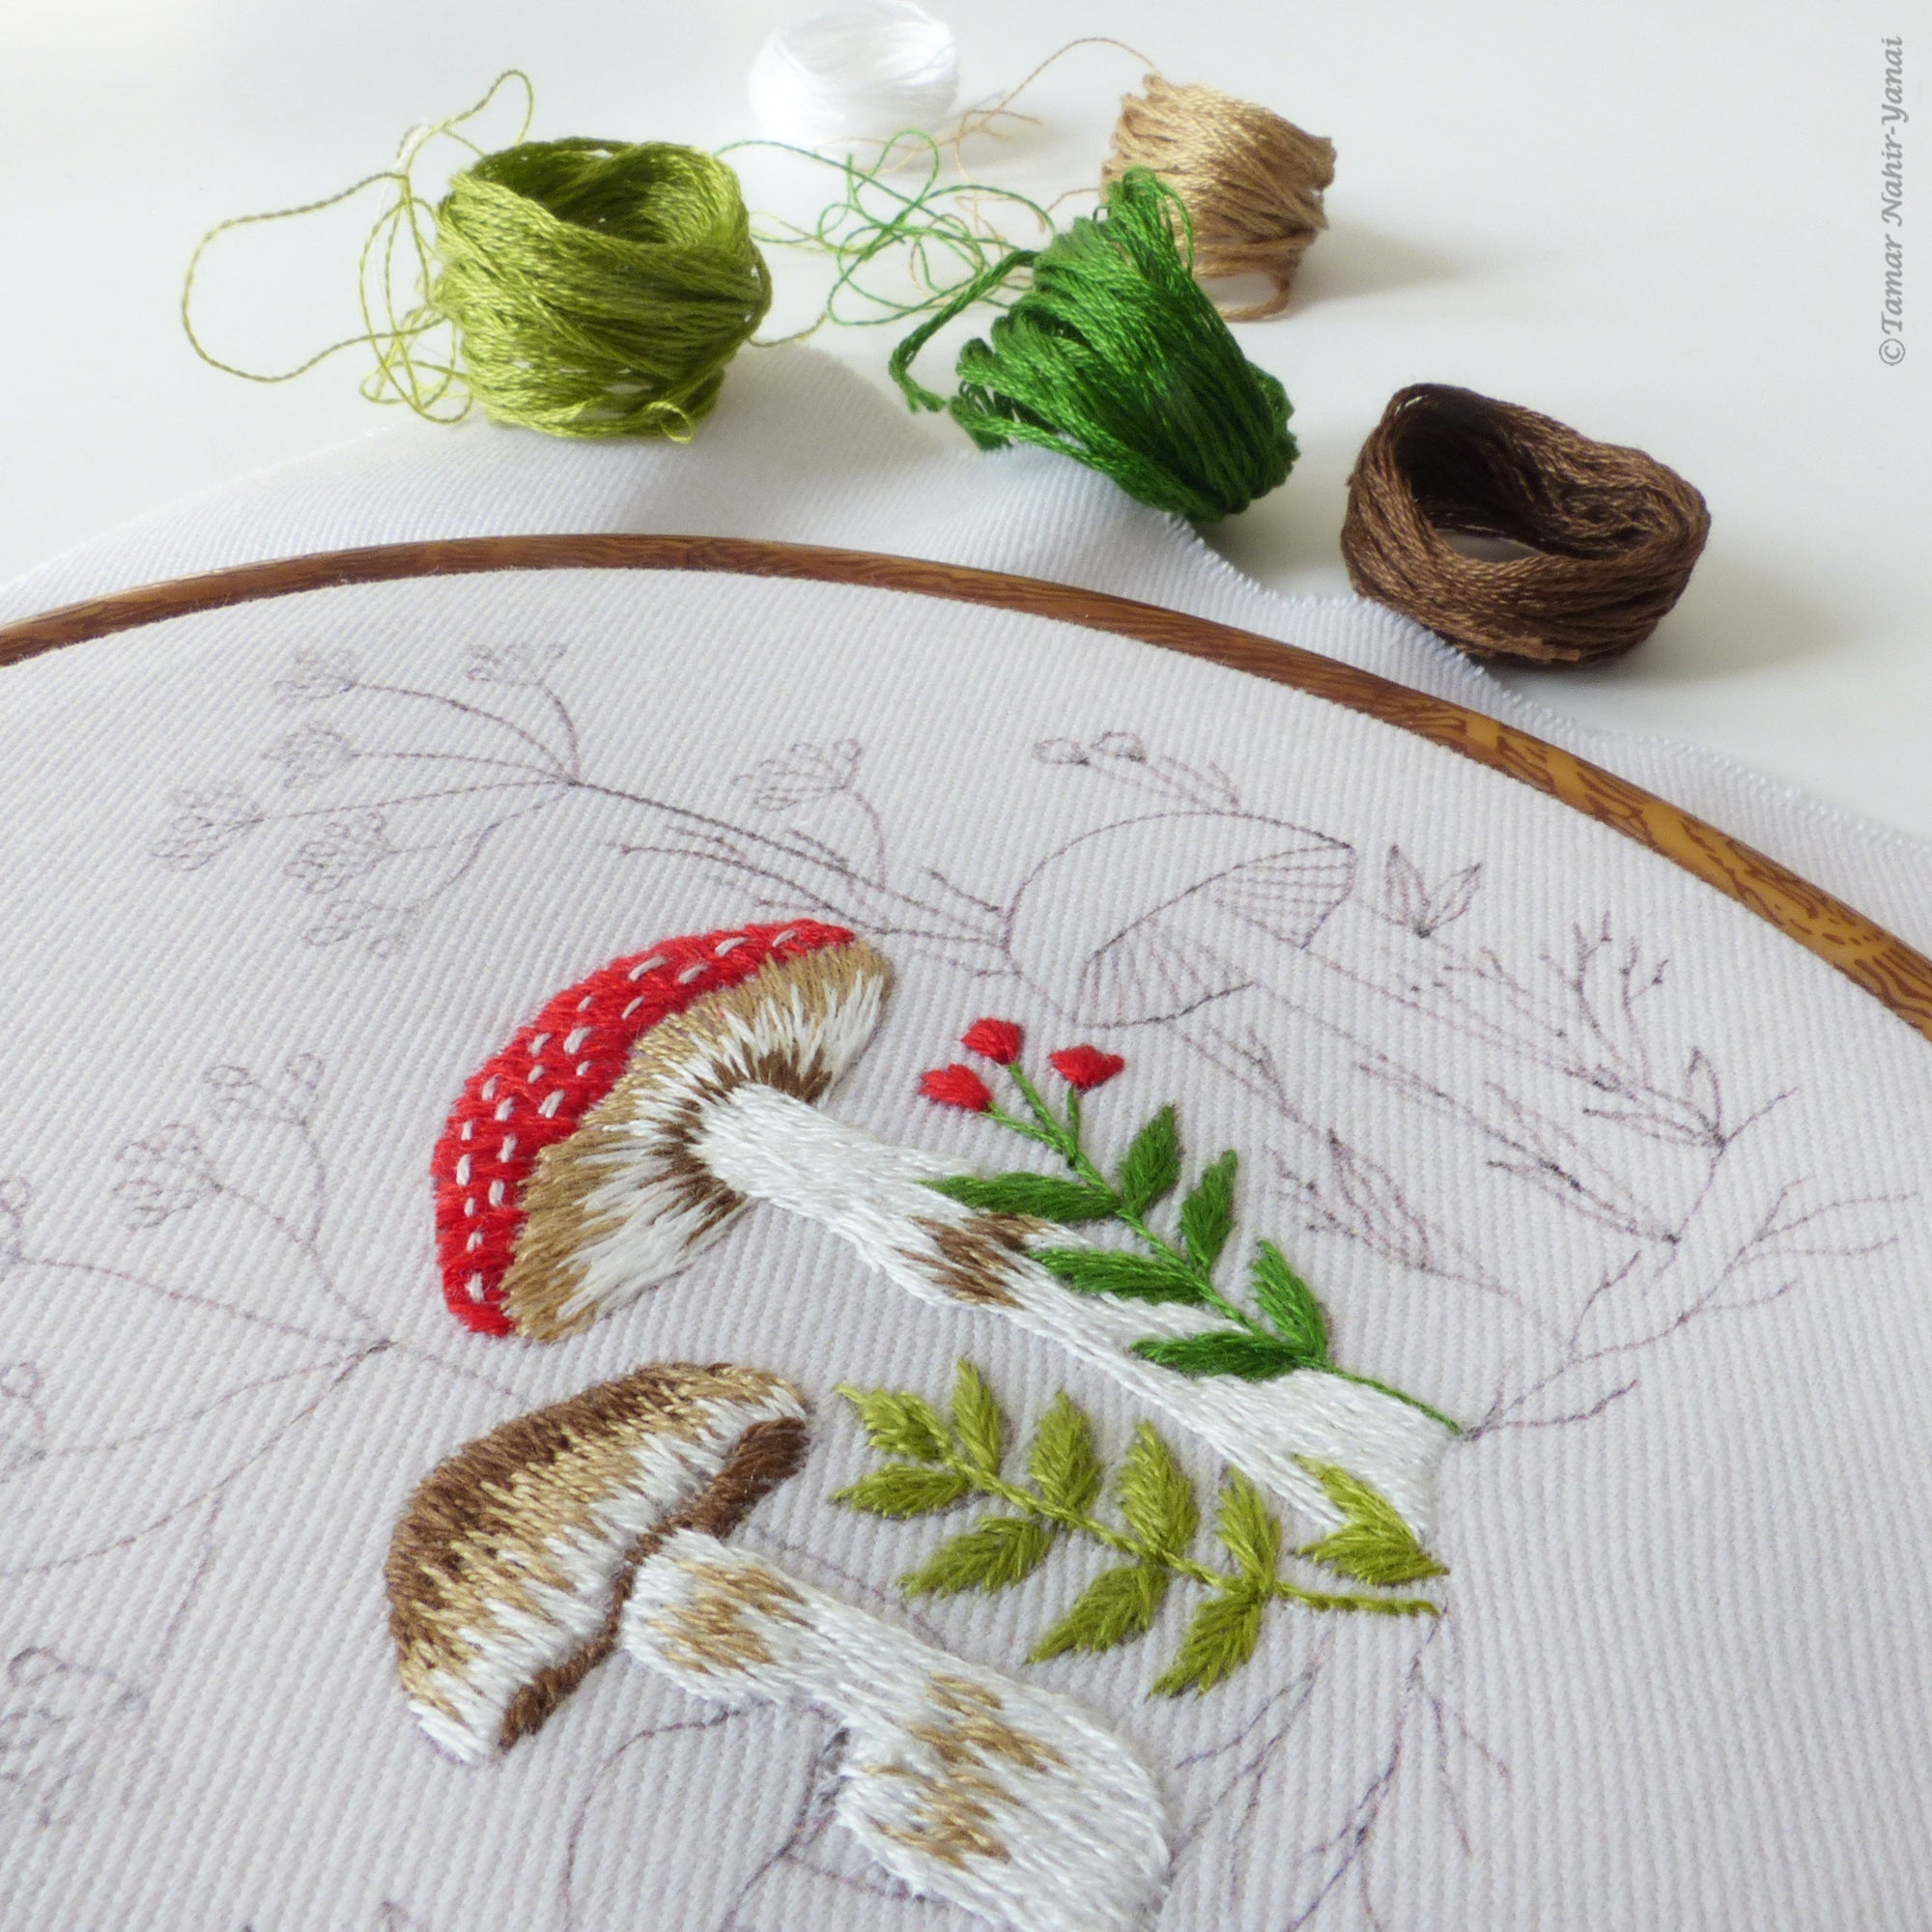 Mushroom Woodland Blackwork Embroidery Kit by Stitched Stories, 8